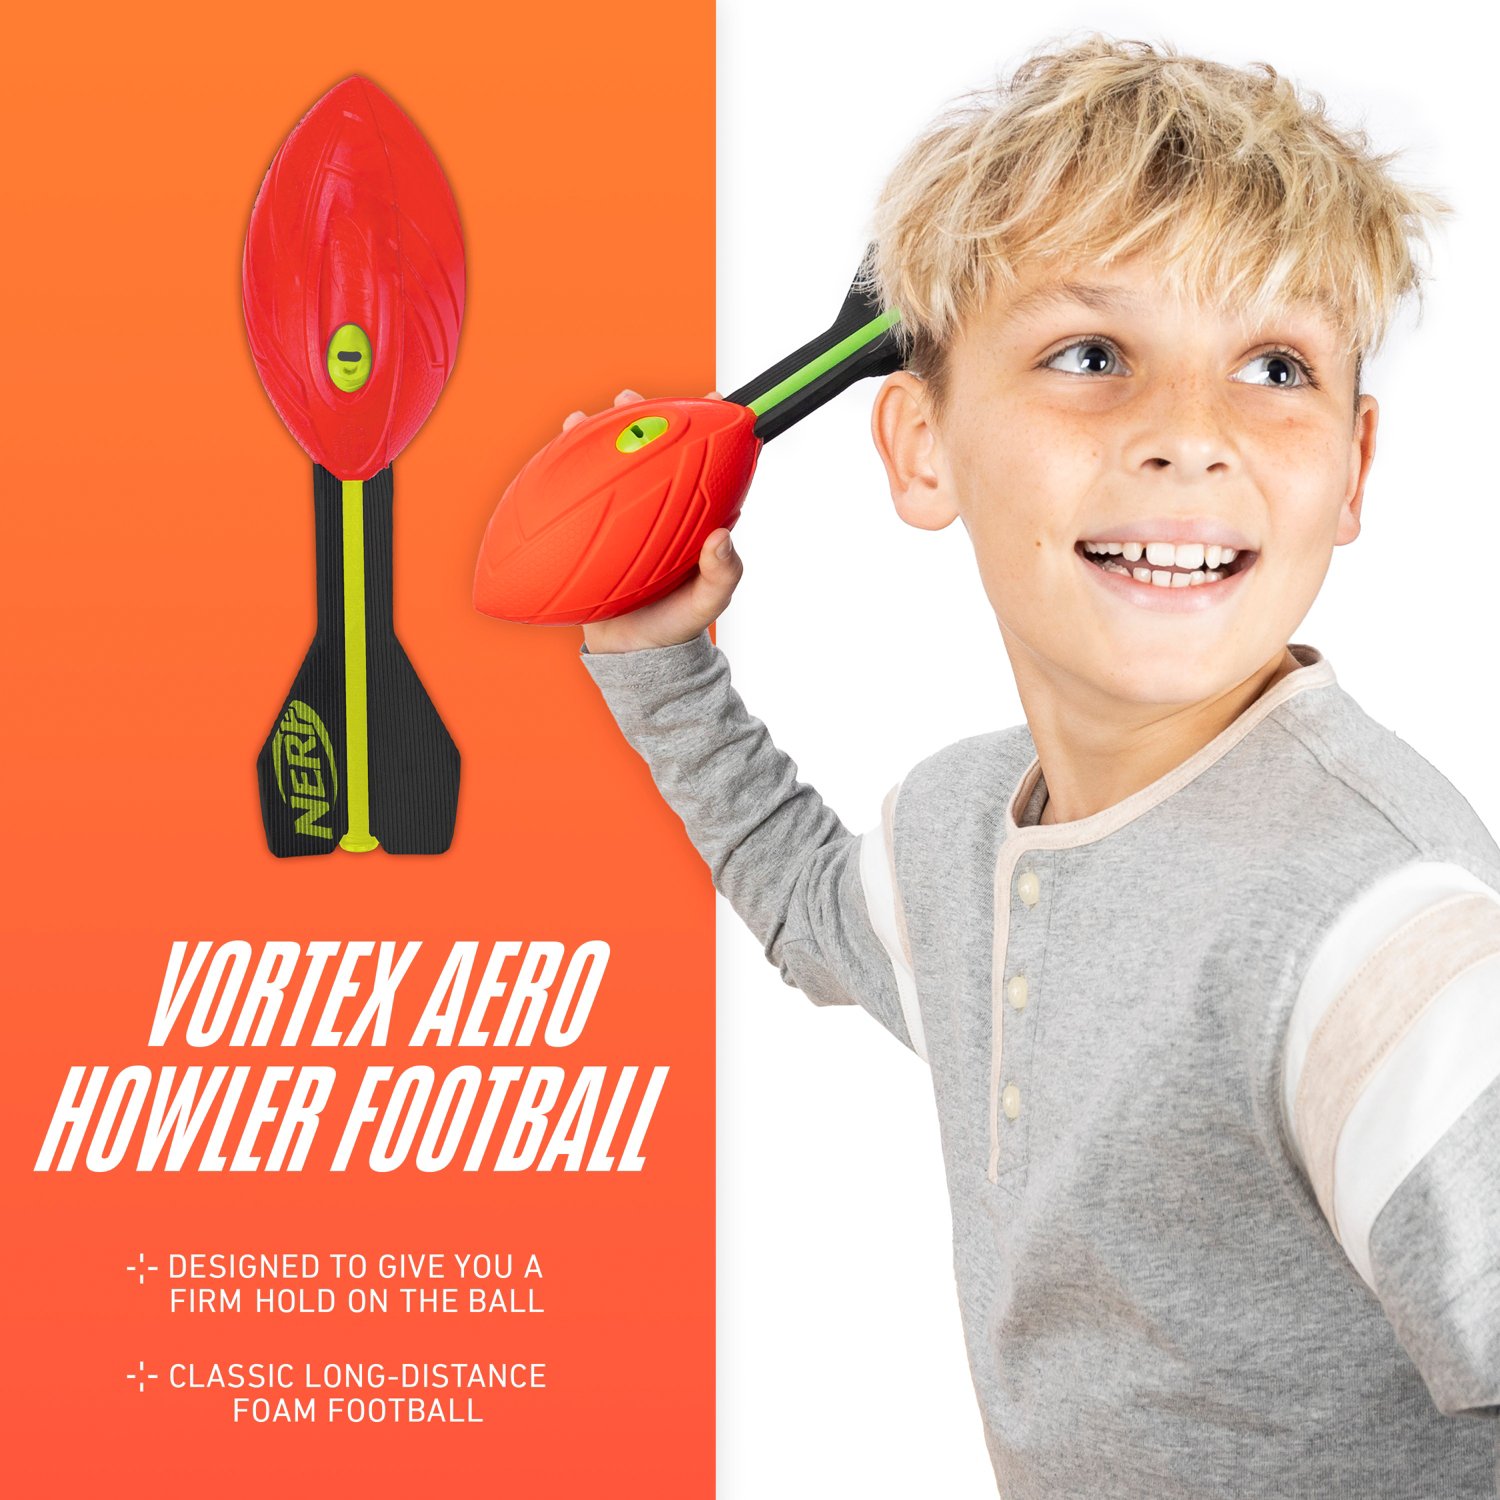 NERF Vortex Aero Howler Foam Football - Red and Black, 1 ct - Kroger